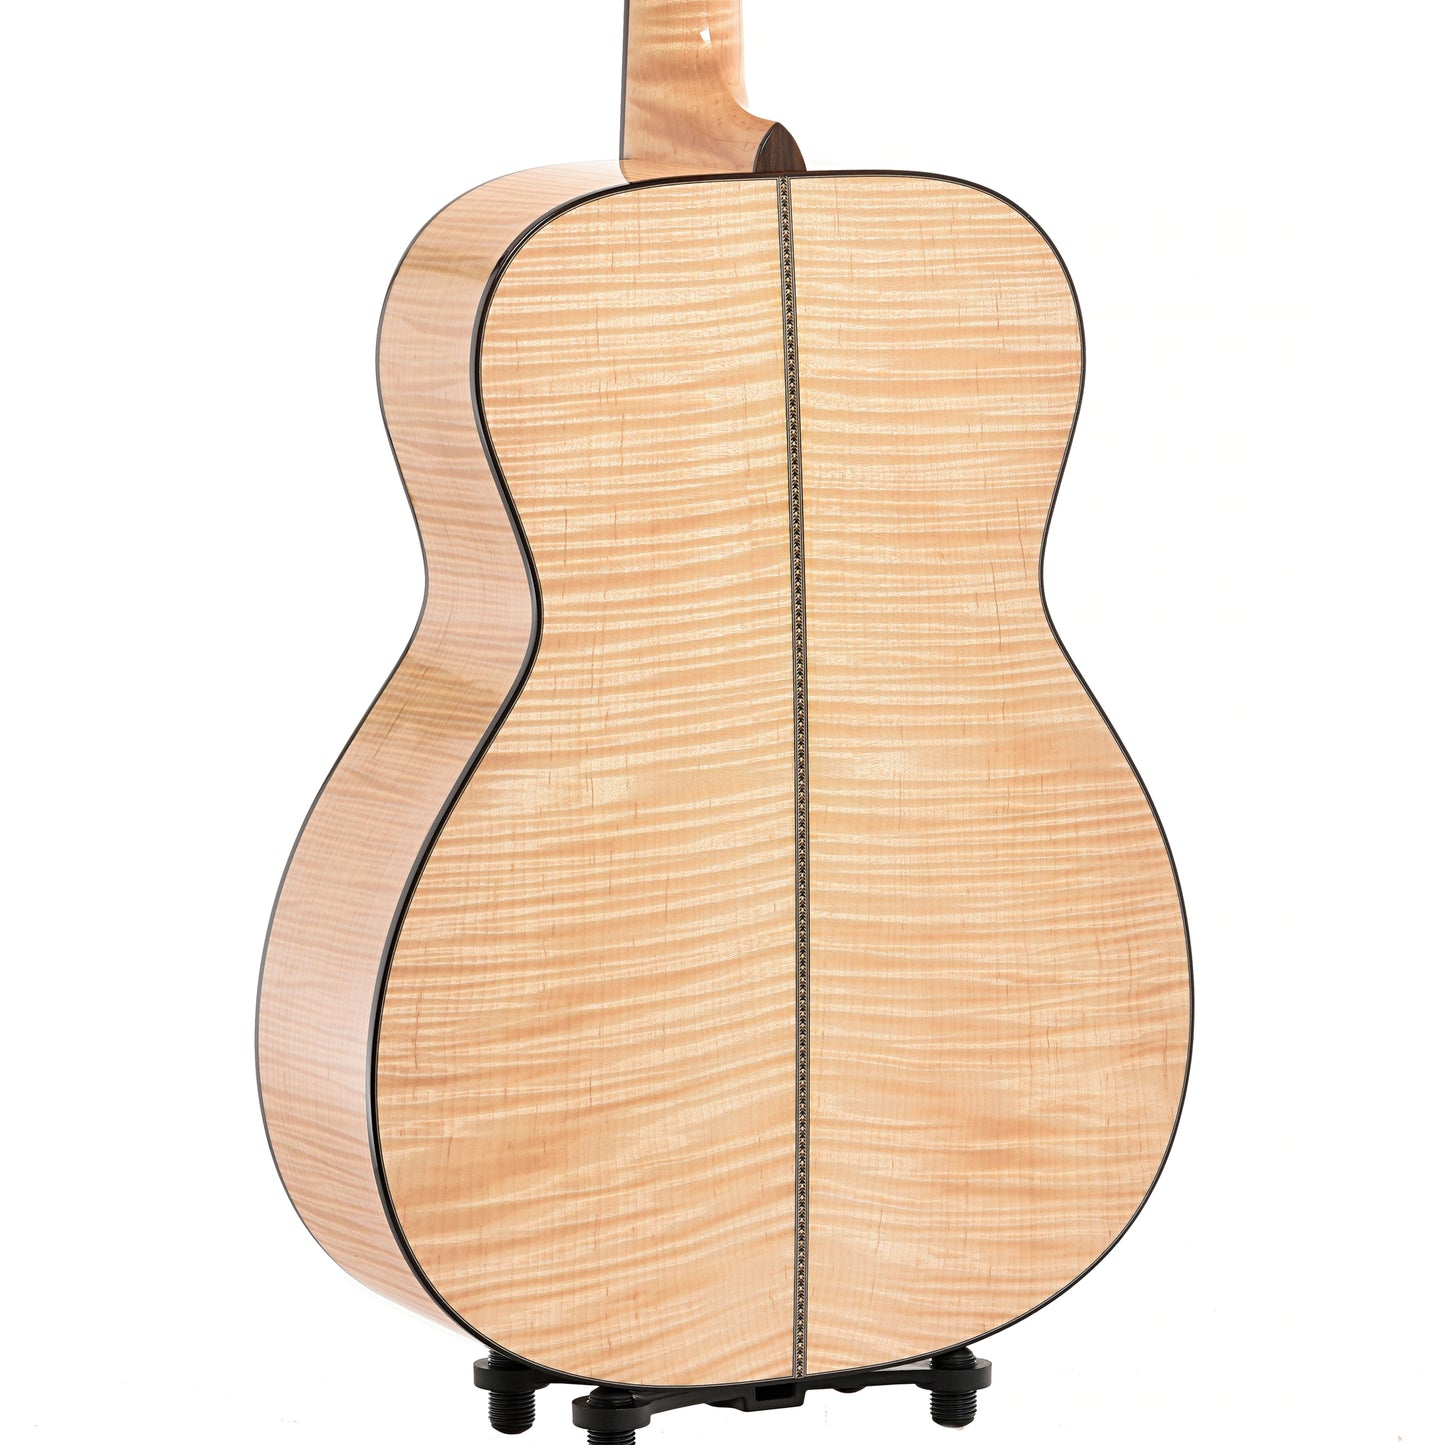 Back and side of Santa Cruz OM Maple Custom Acoustic Guitar